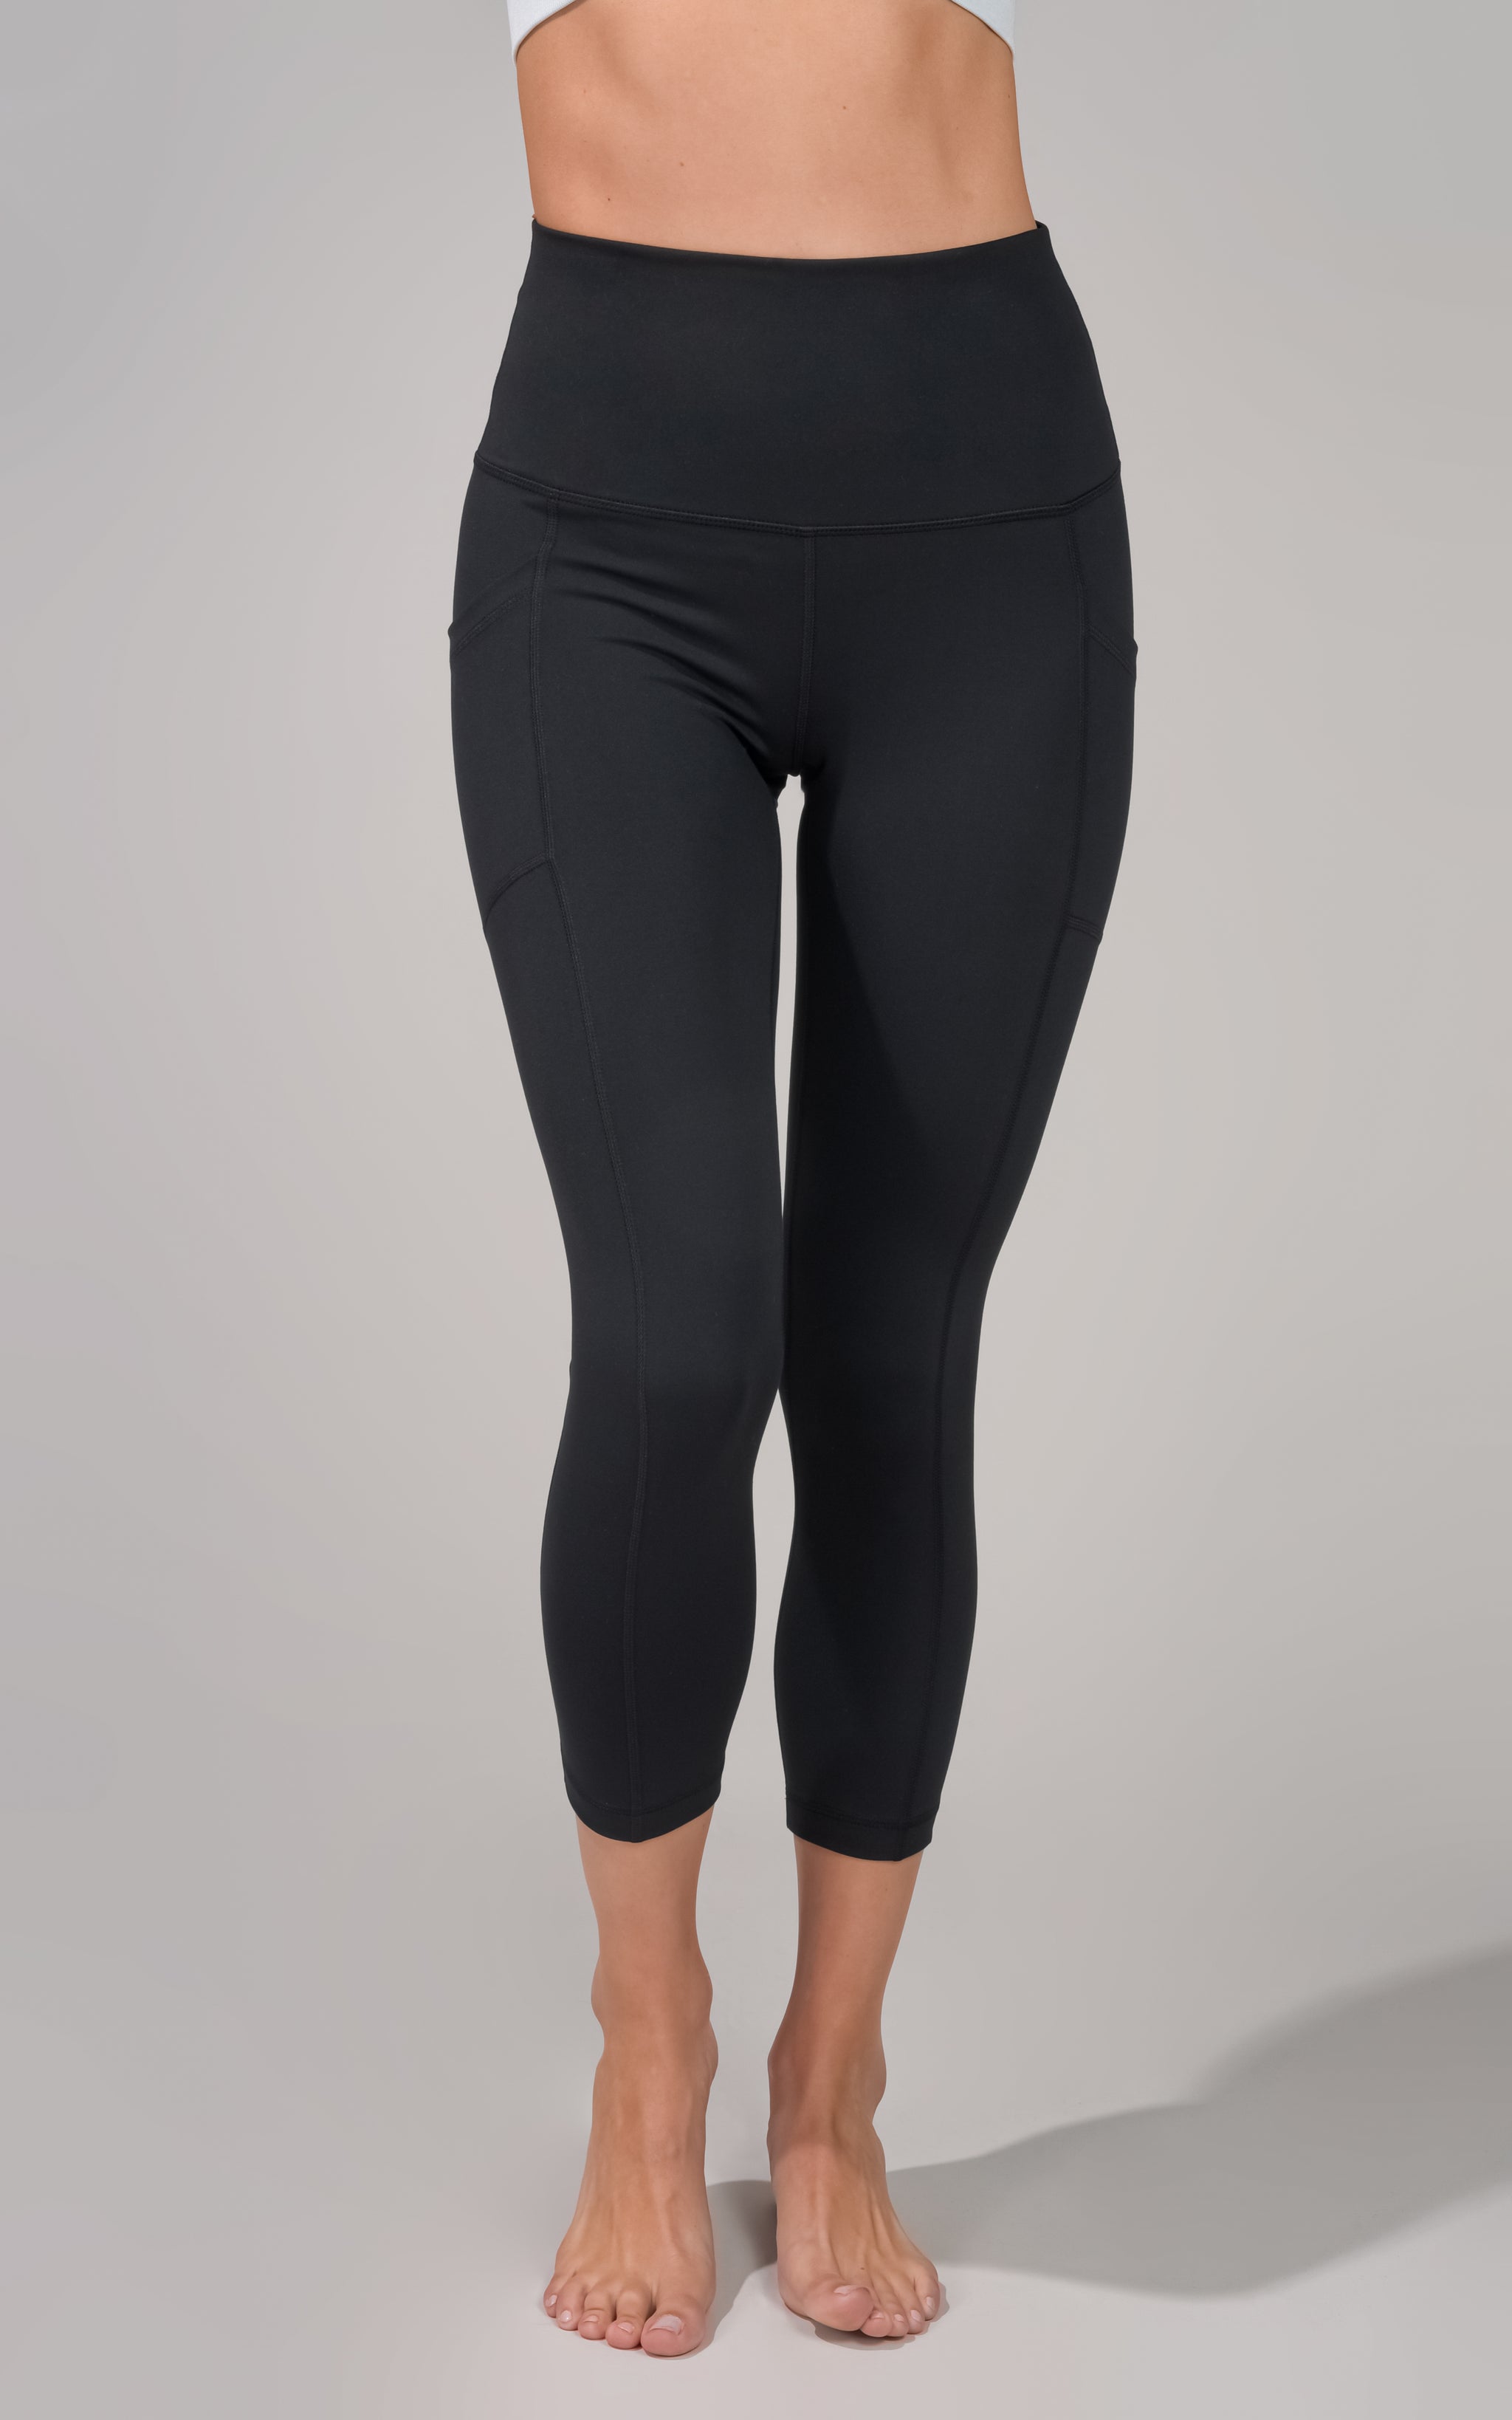 Yogalicious High Waist Squat Proof Yoga Capri Leggings with Pockets for  Women - Black Lux with Pocket - Medium 